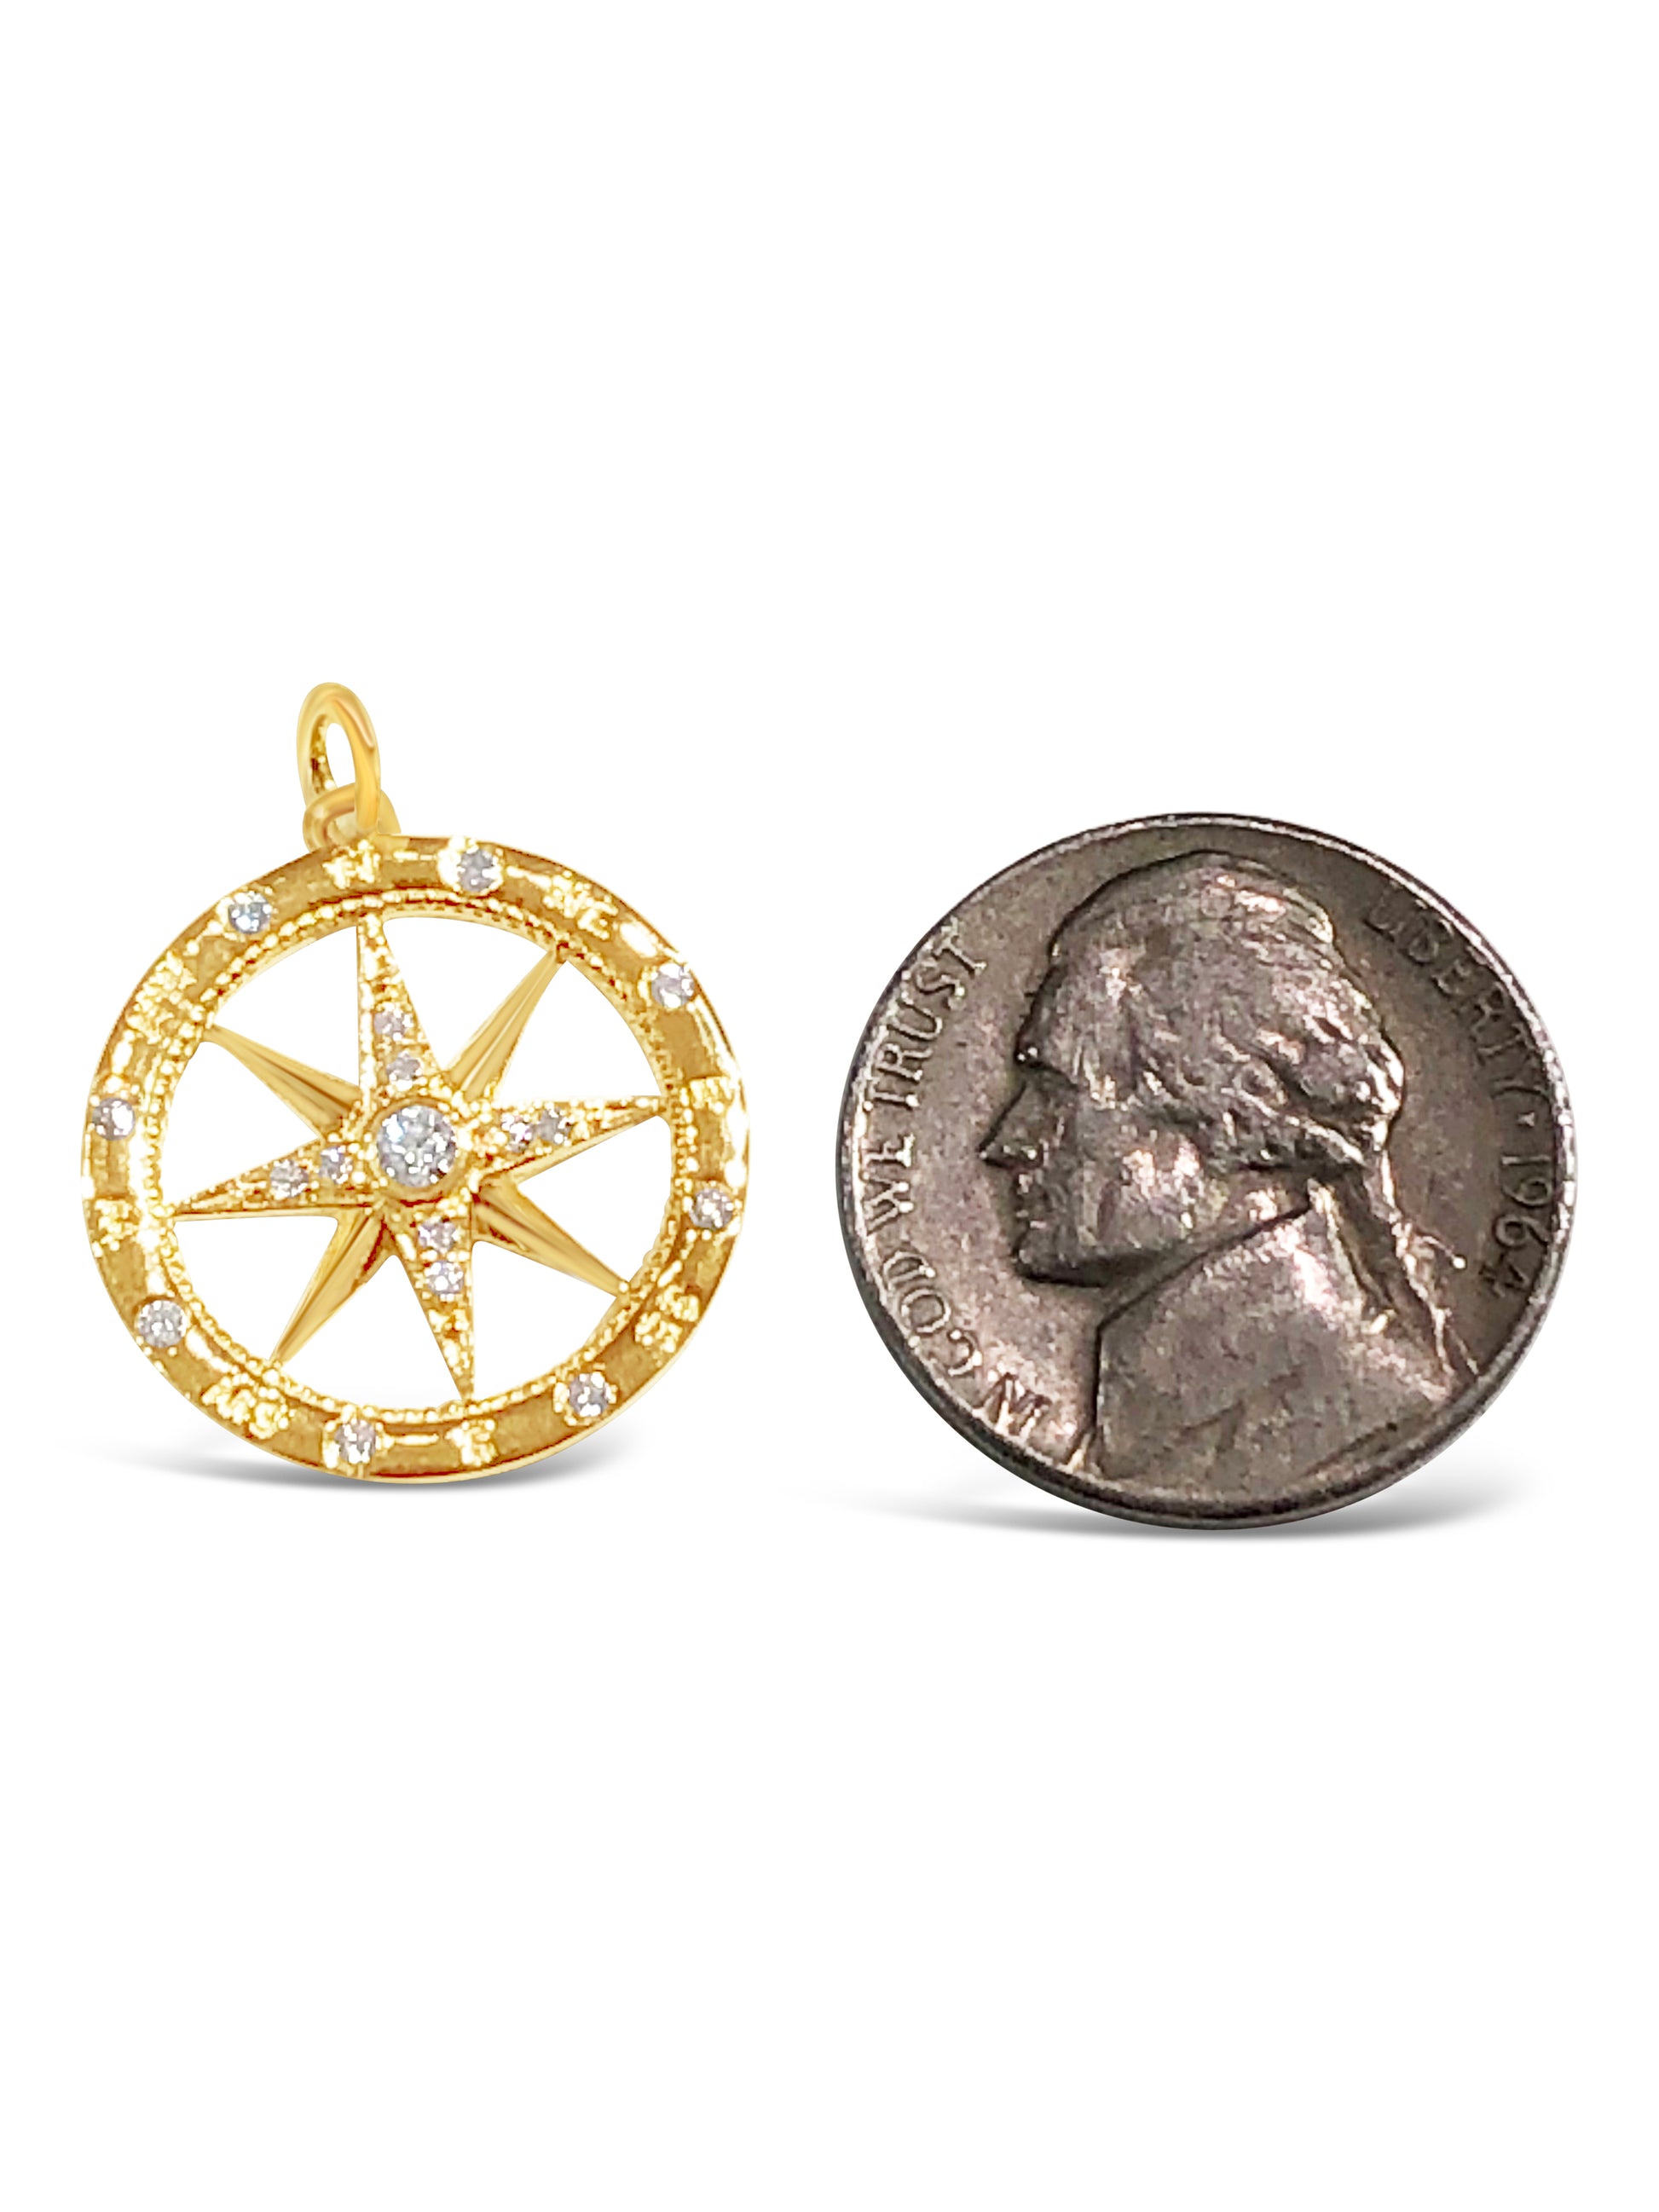 compass rose pendant with diamonds 14k yellow gold